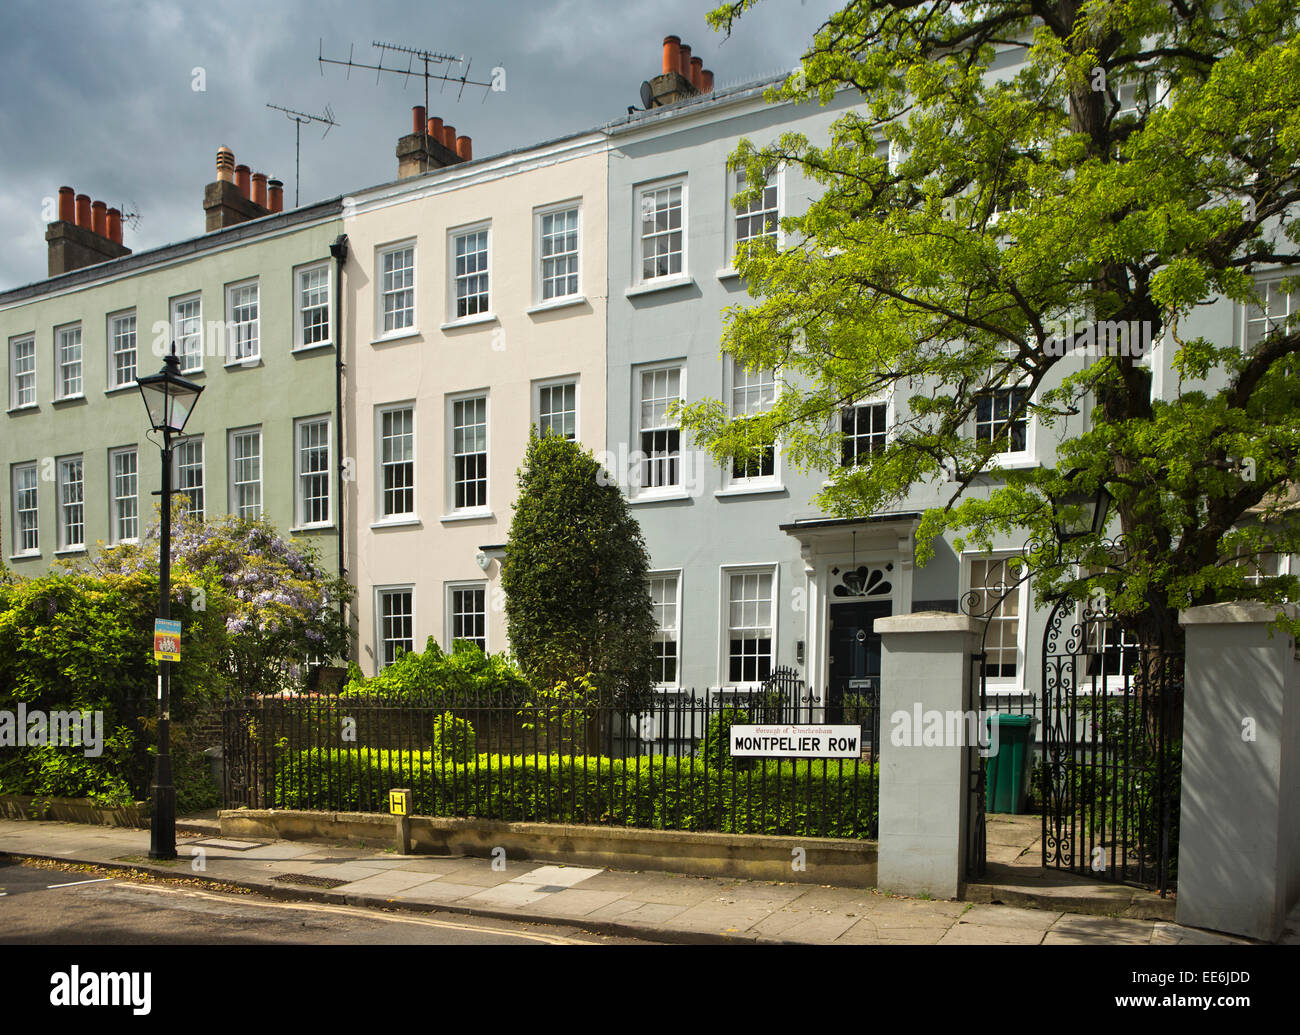 UK, Londra, Twickenham, Montpelier Row, 1720 terrazza di case in stile georgiano Foto Stock